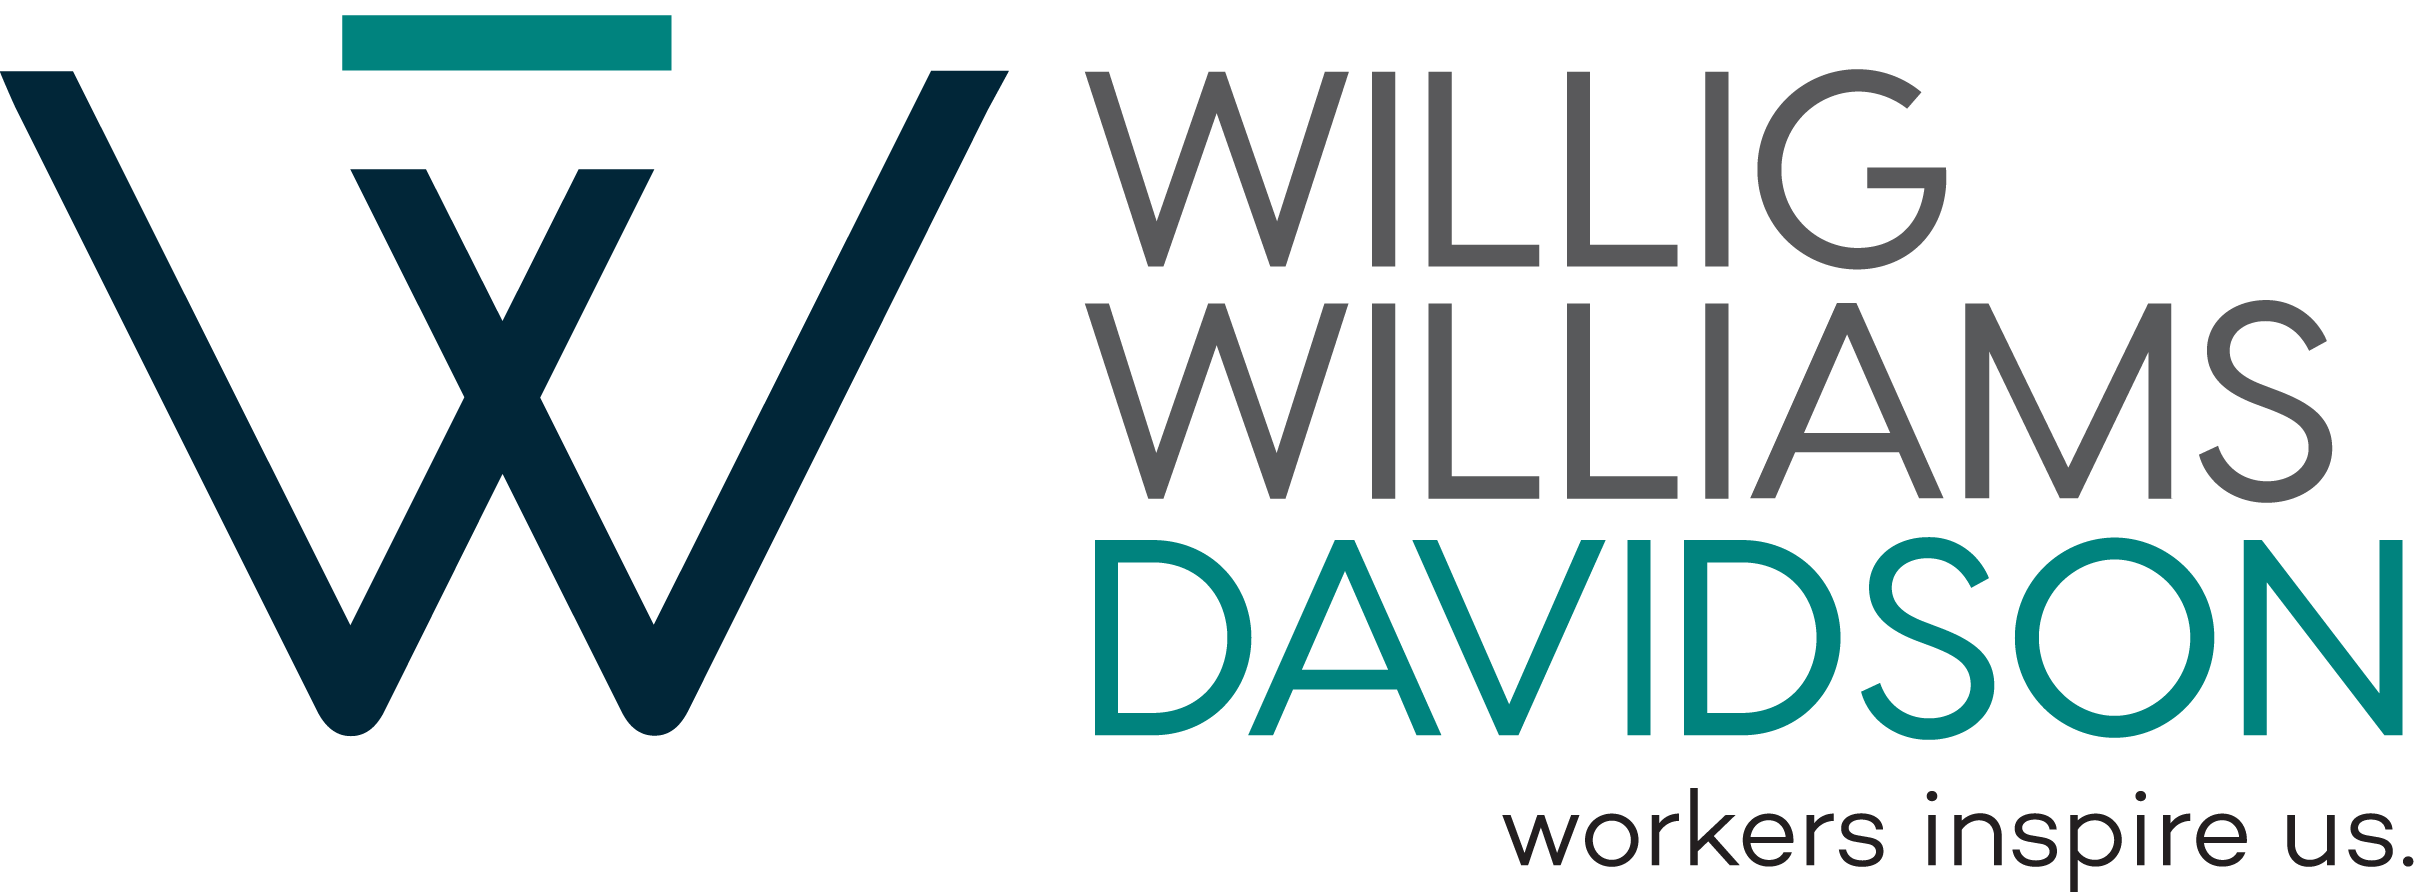 Willig, Williams & Davidson